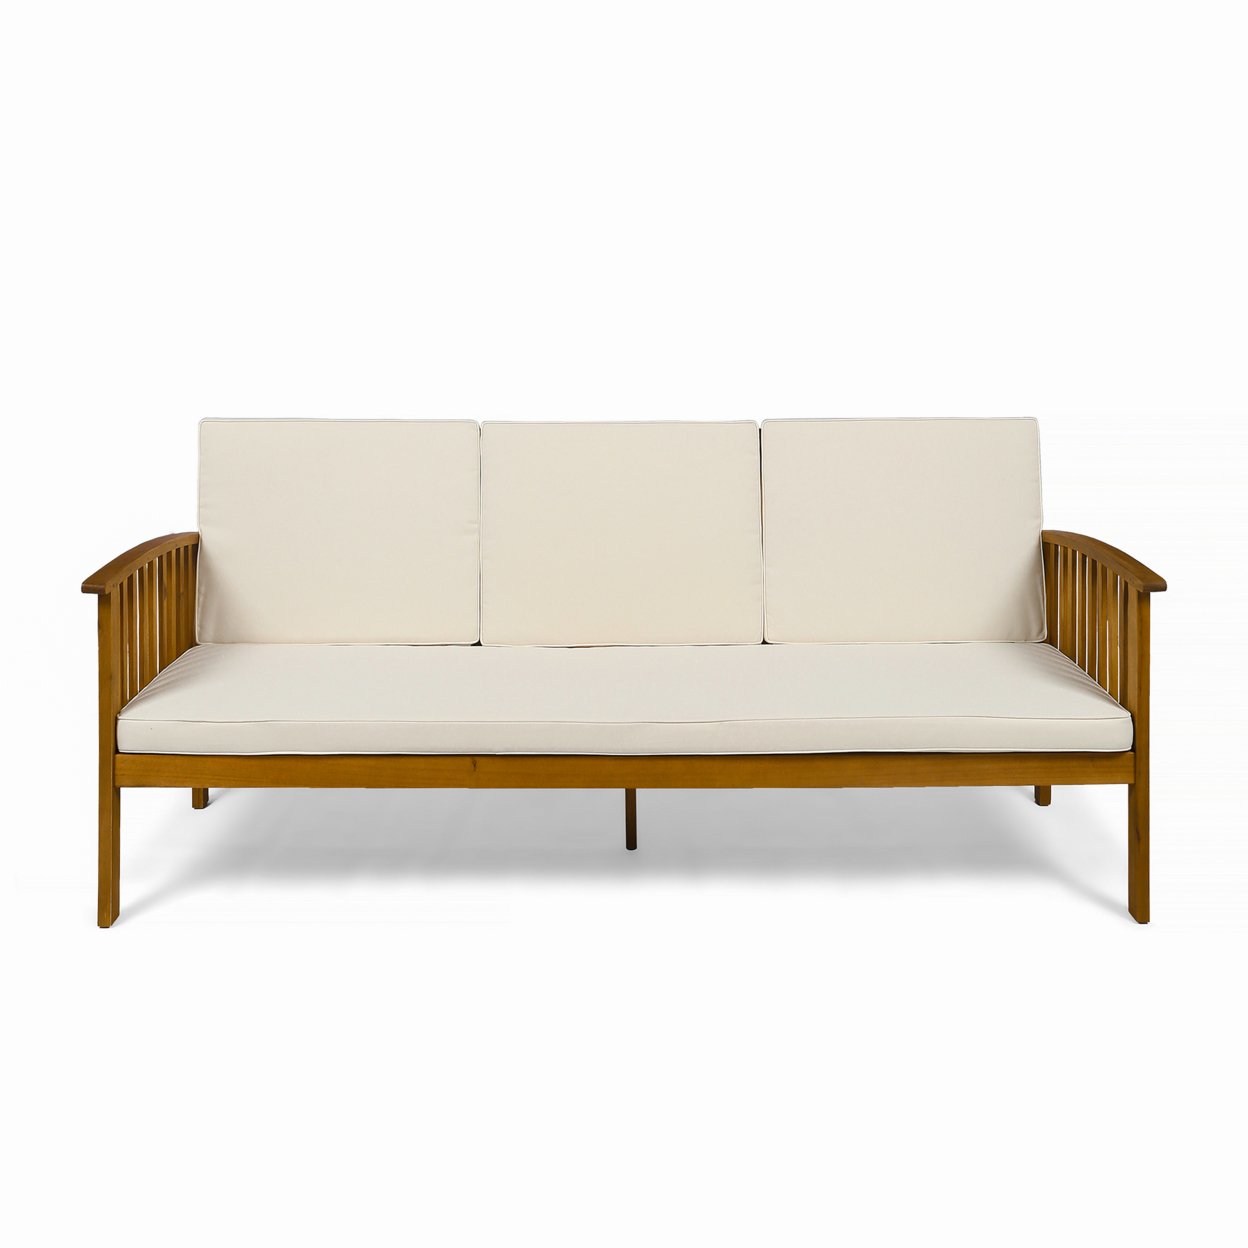 Breenda Outdoor Acacia Wood Sofa With Cushions - Gray